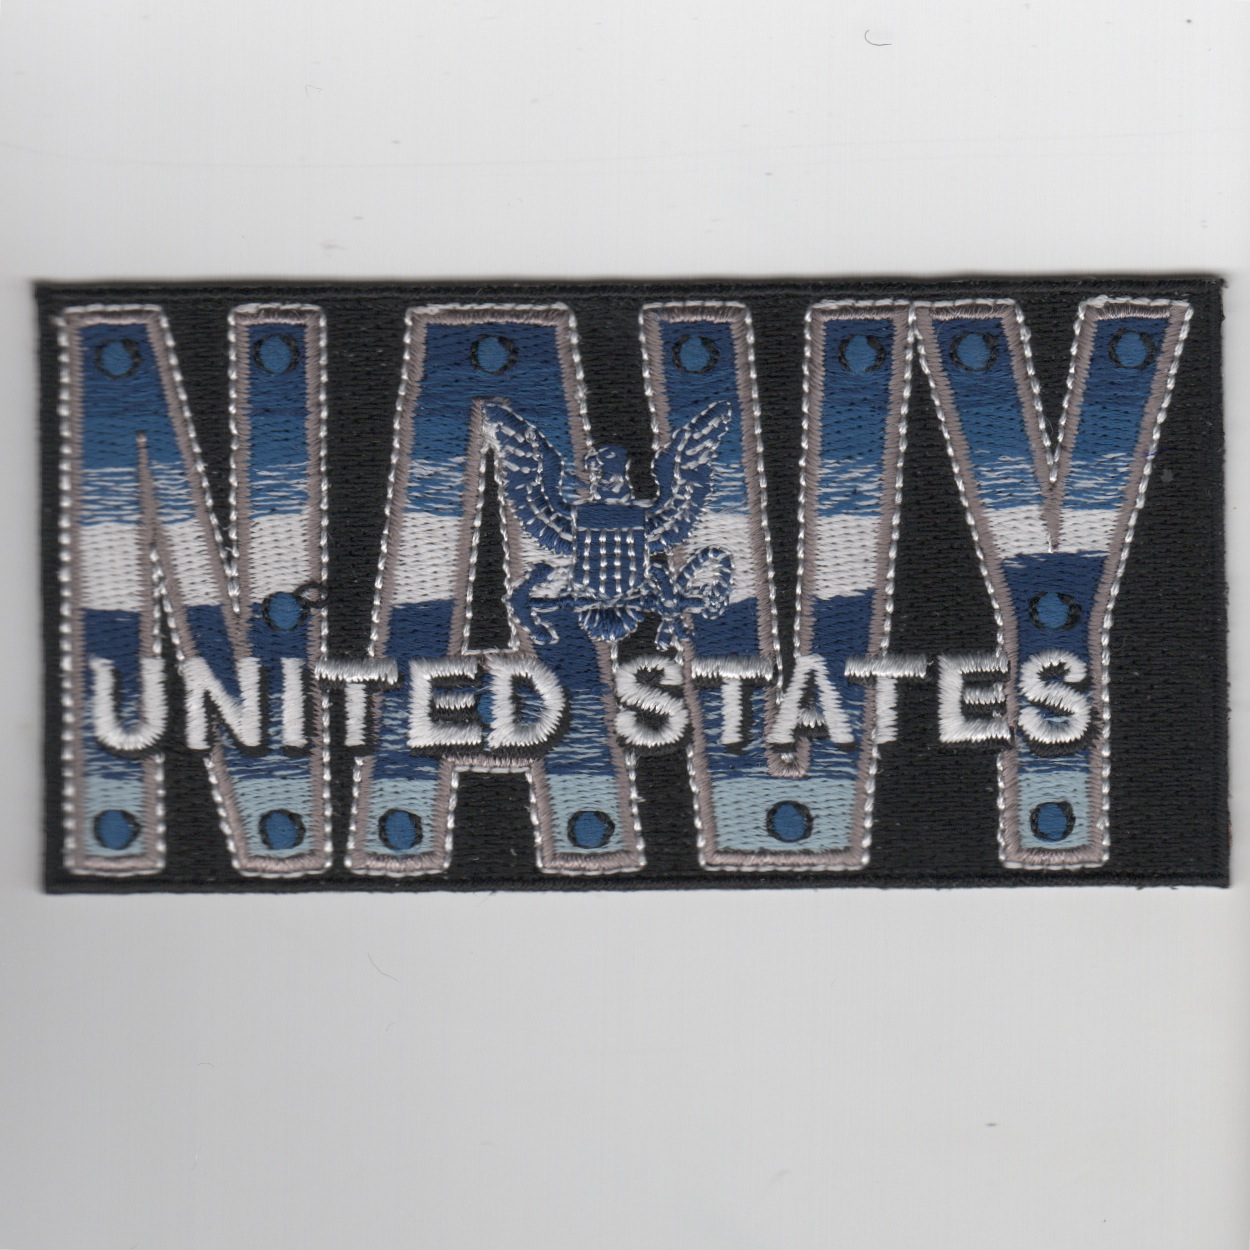 US NAVY (Rect/Black/Blue Letters)